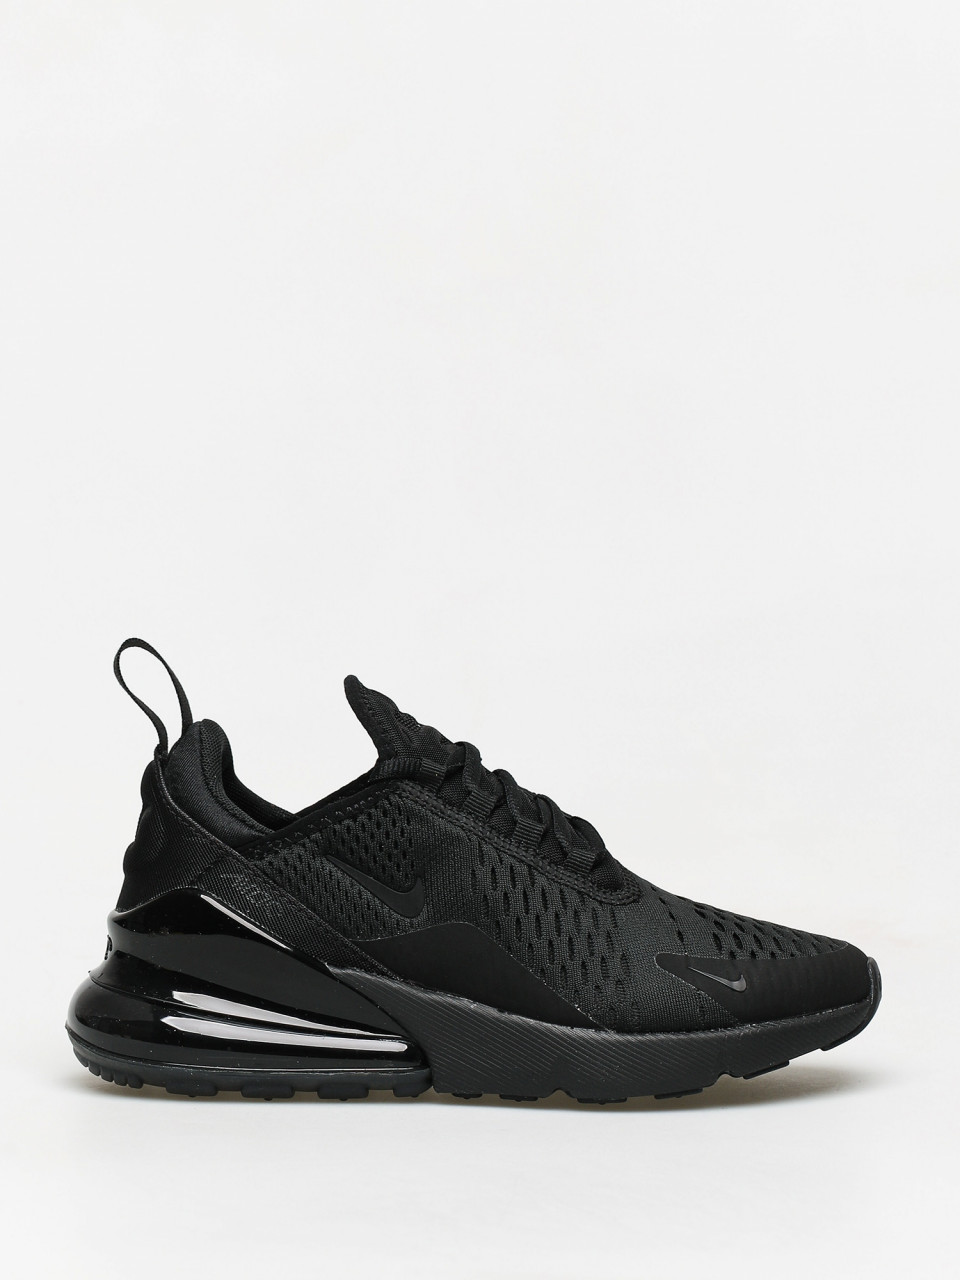 Nike Women's AIR MAX 270 Sneakers Black/Black/Black